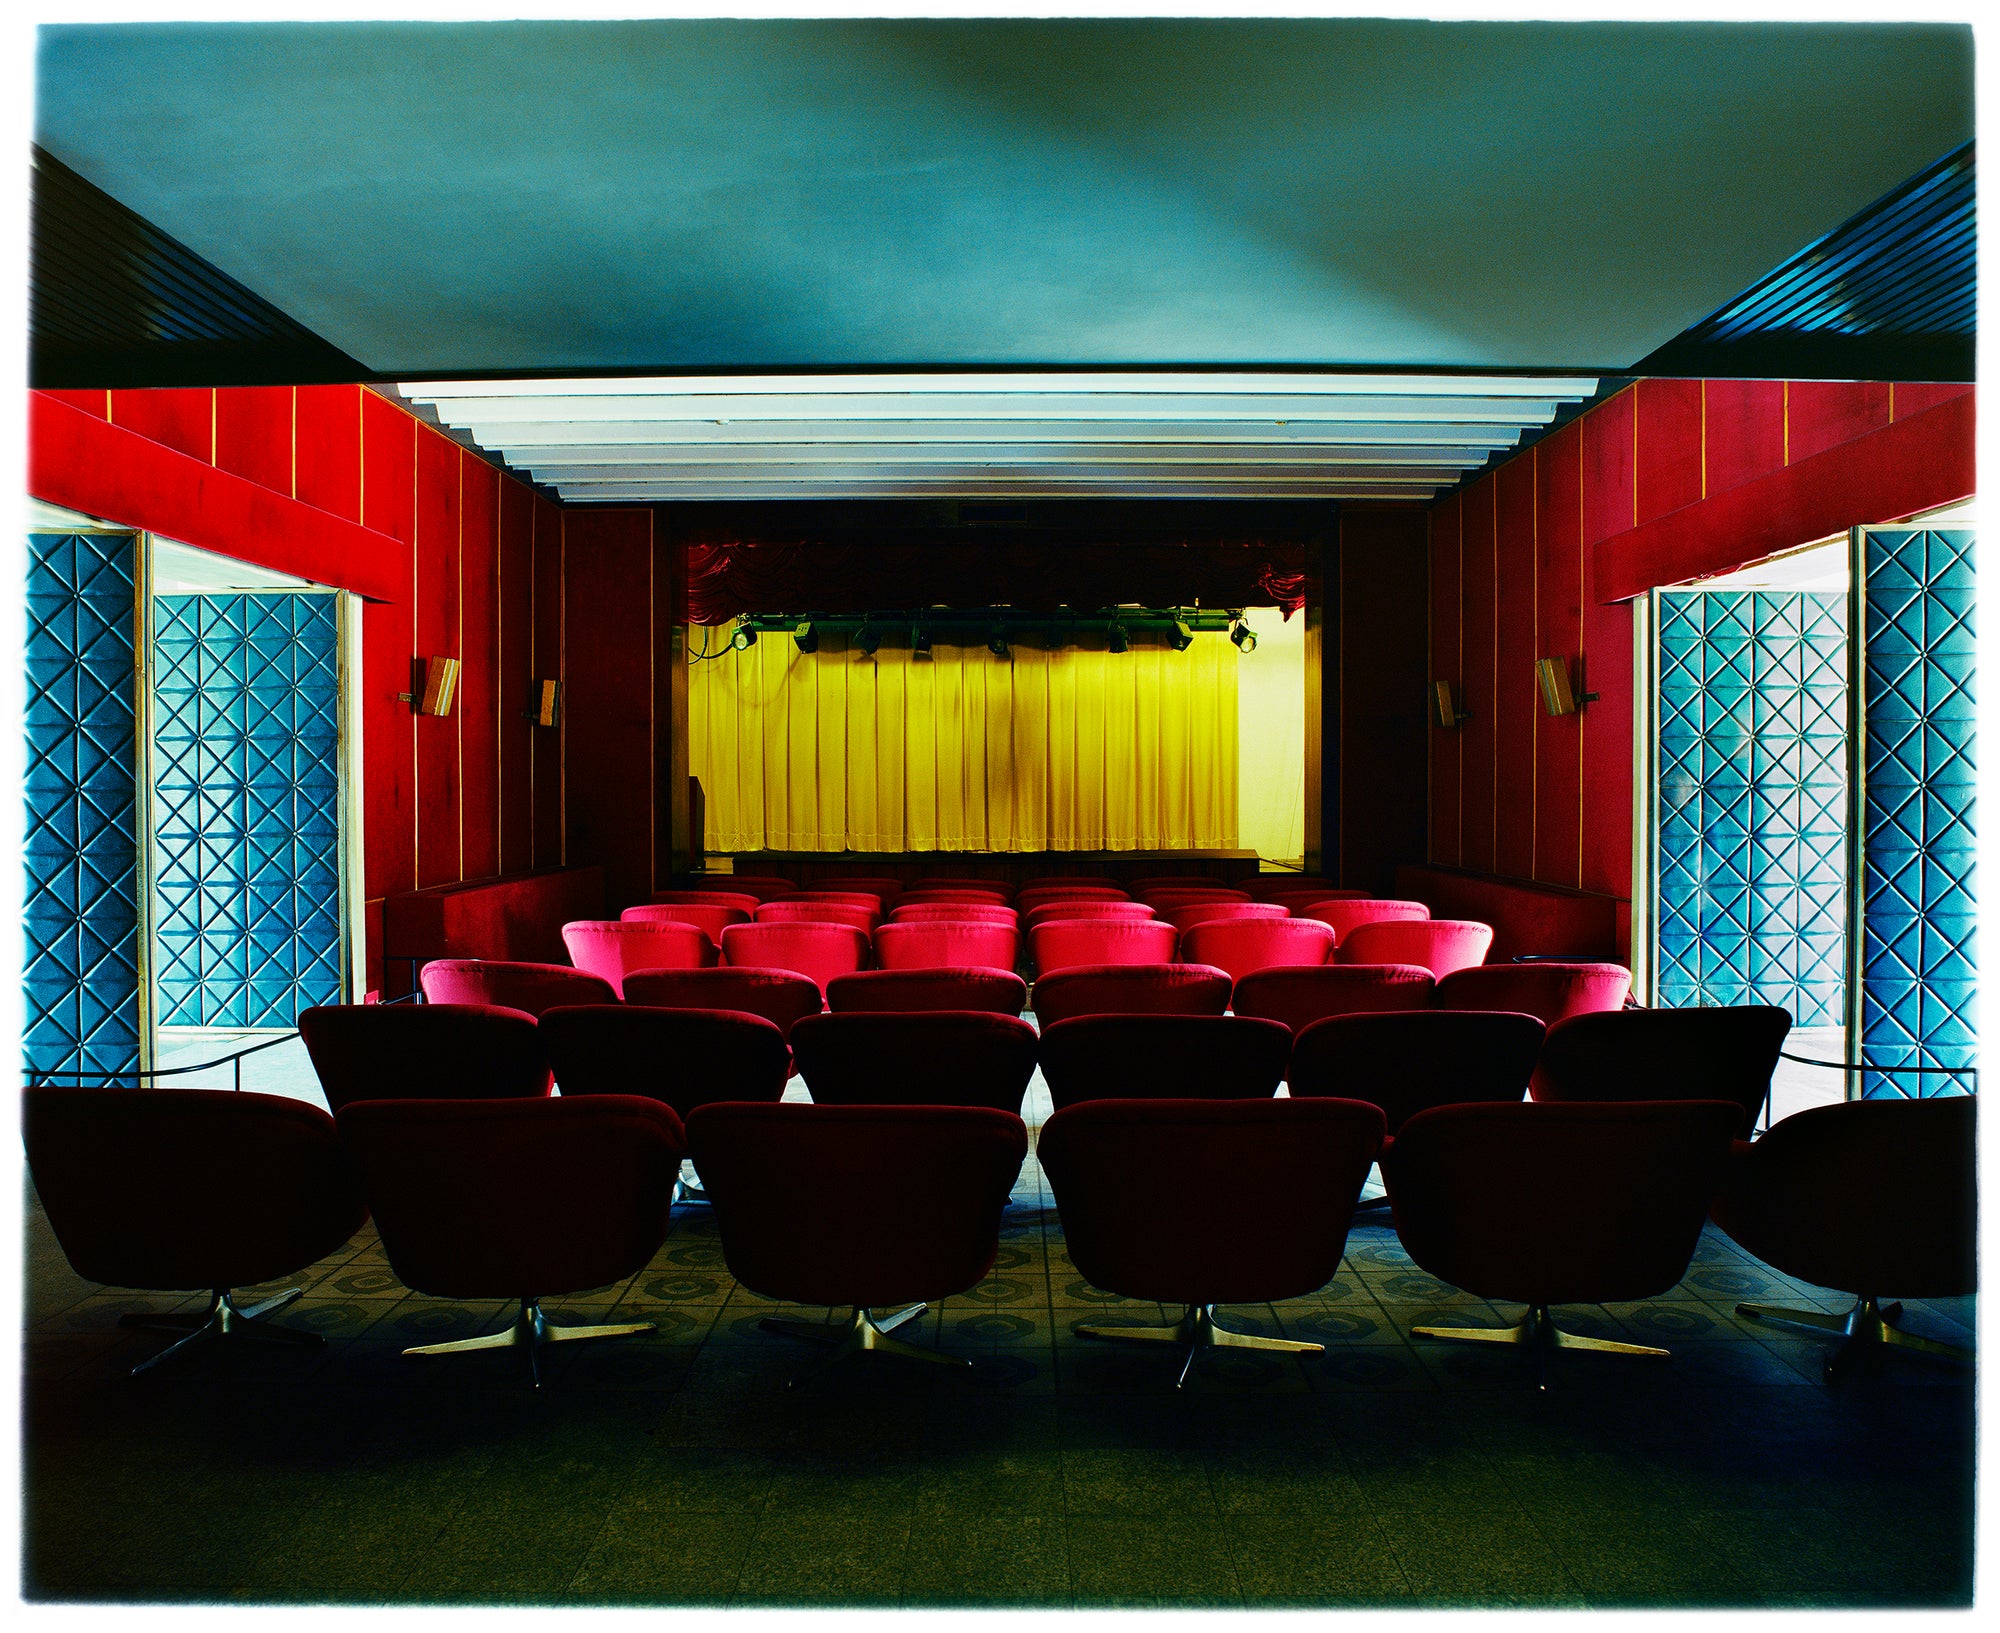 Small cinema interior photograph by Richard Heeps.